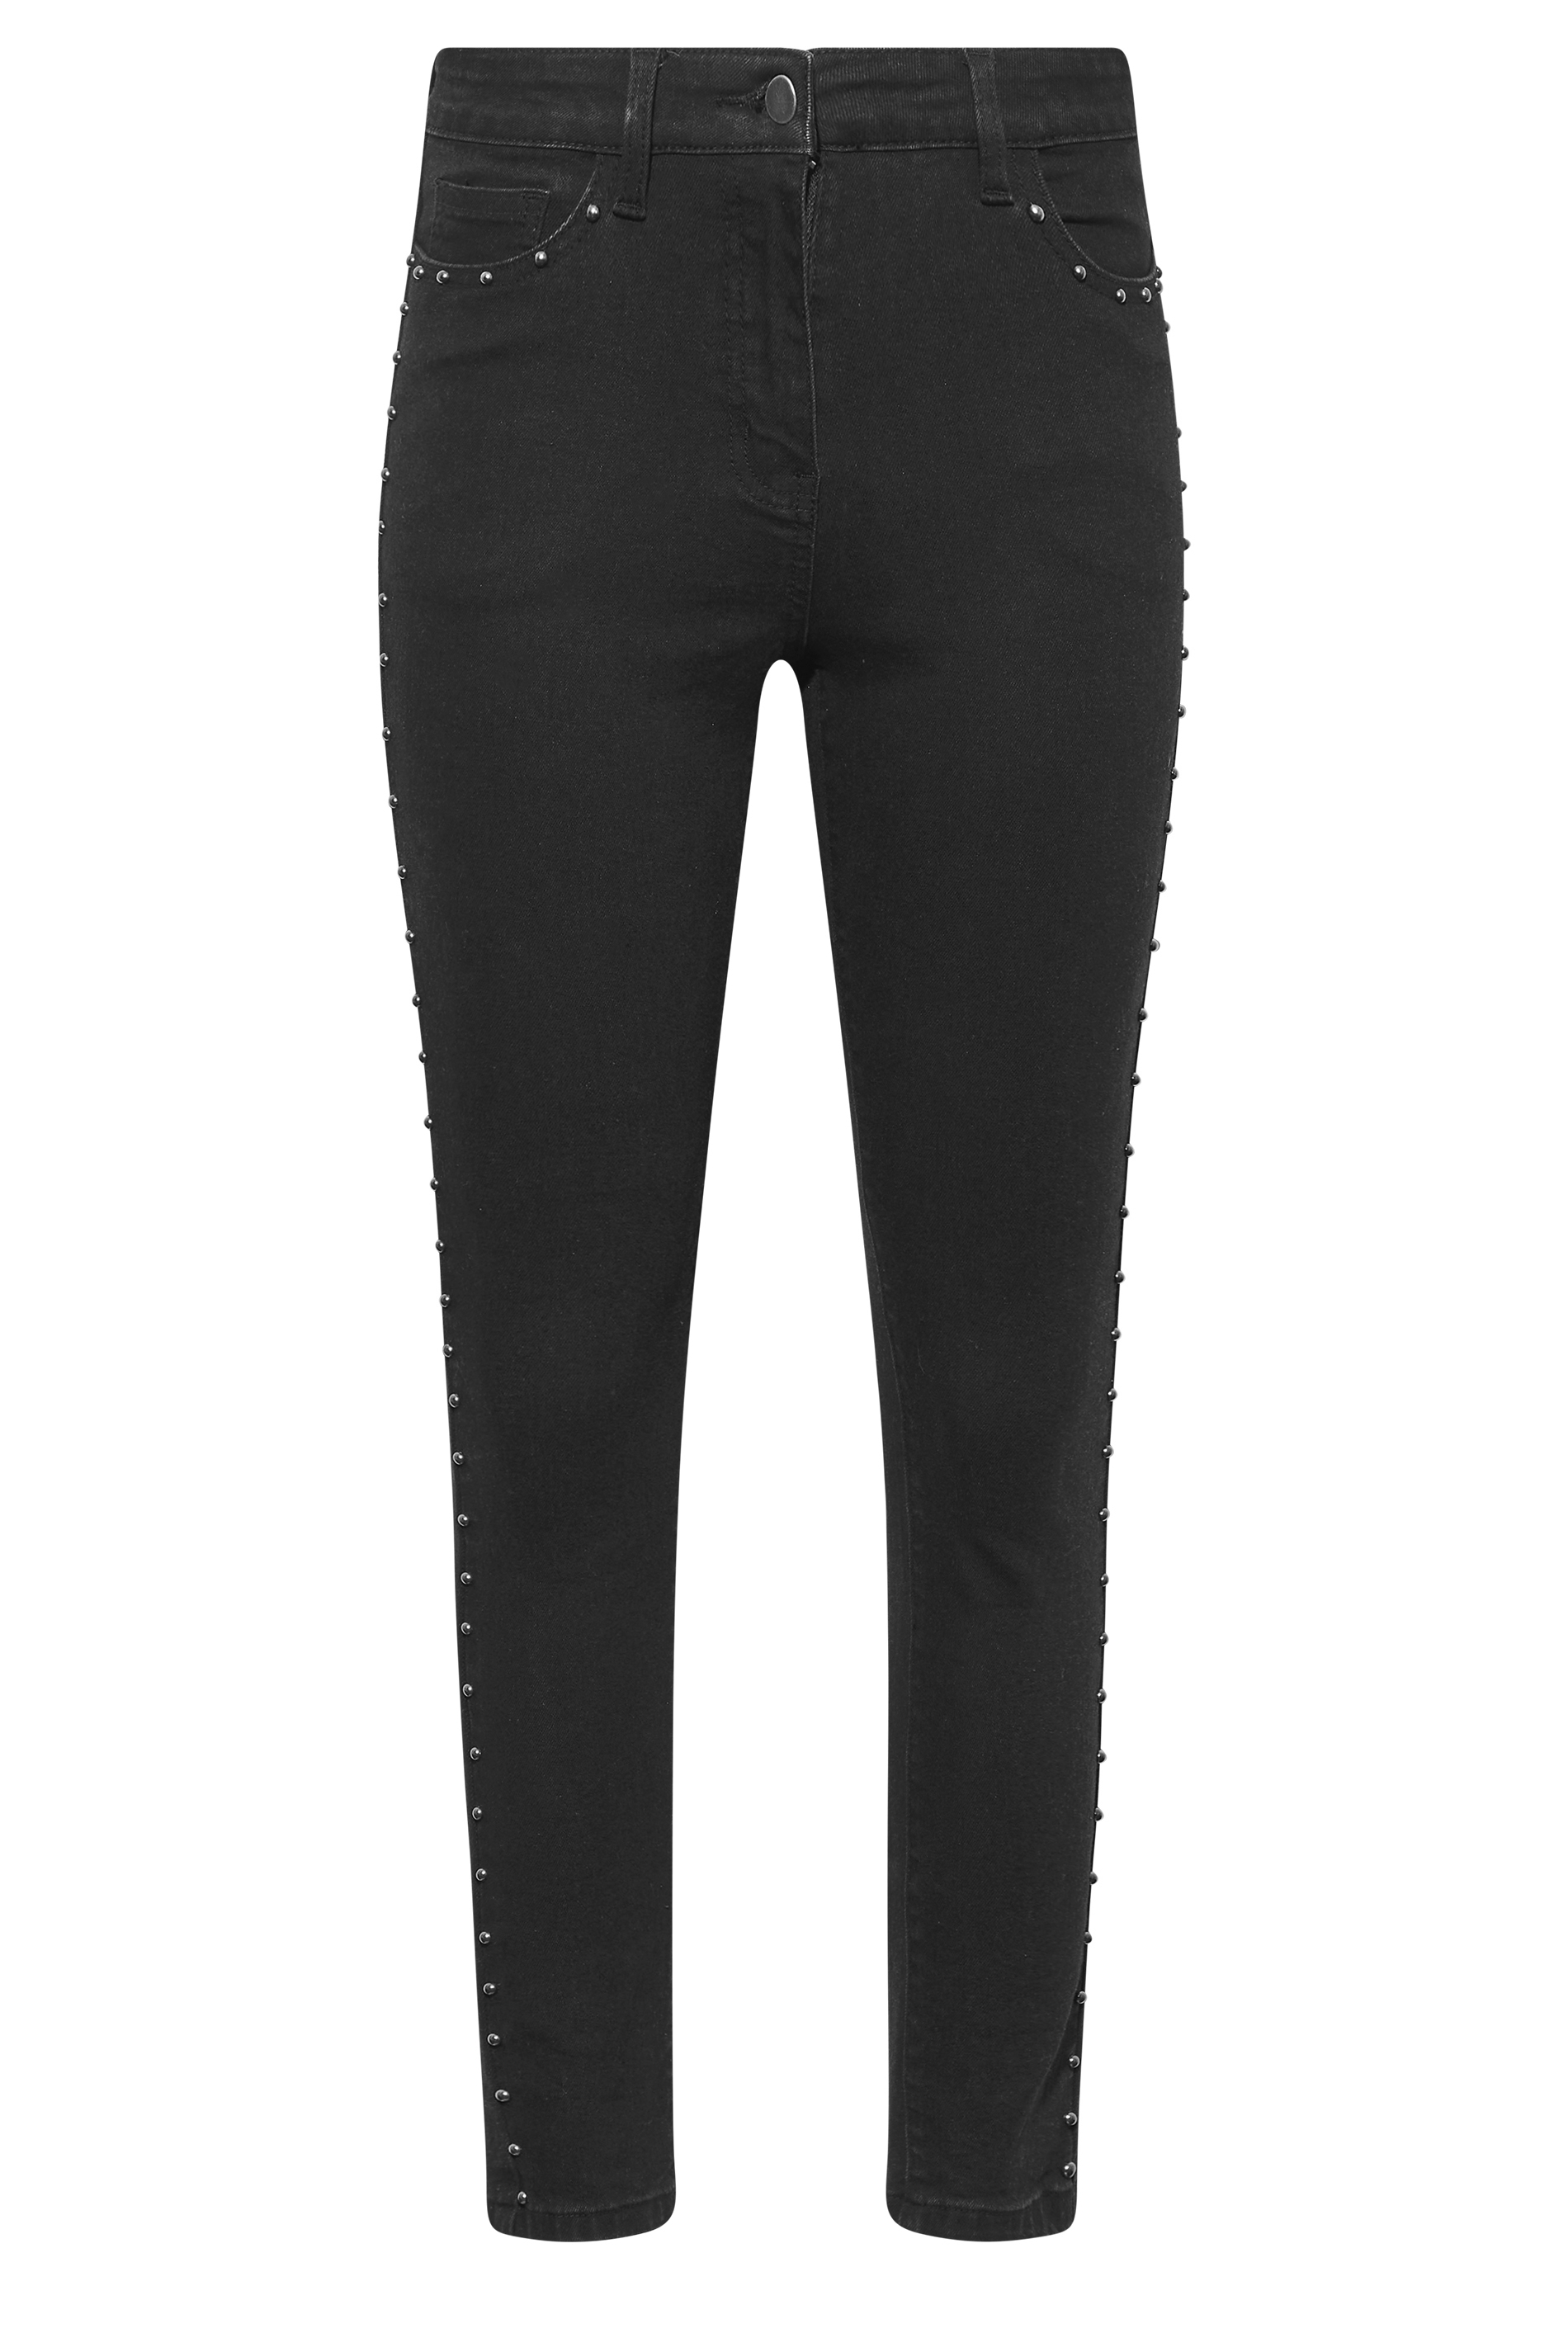 Petite Black Stud Skinny AVA Jeans | PixieGirl